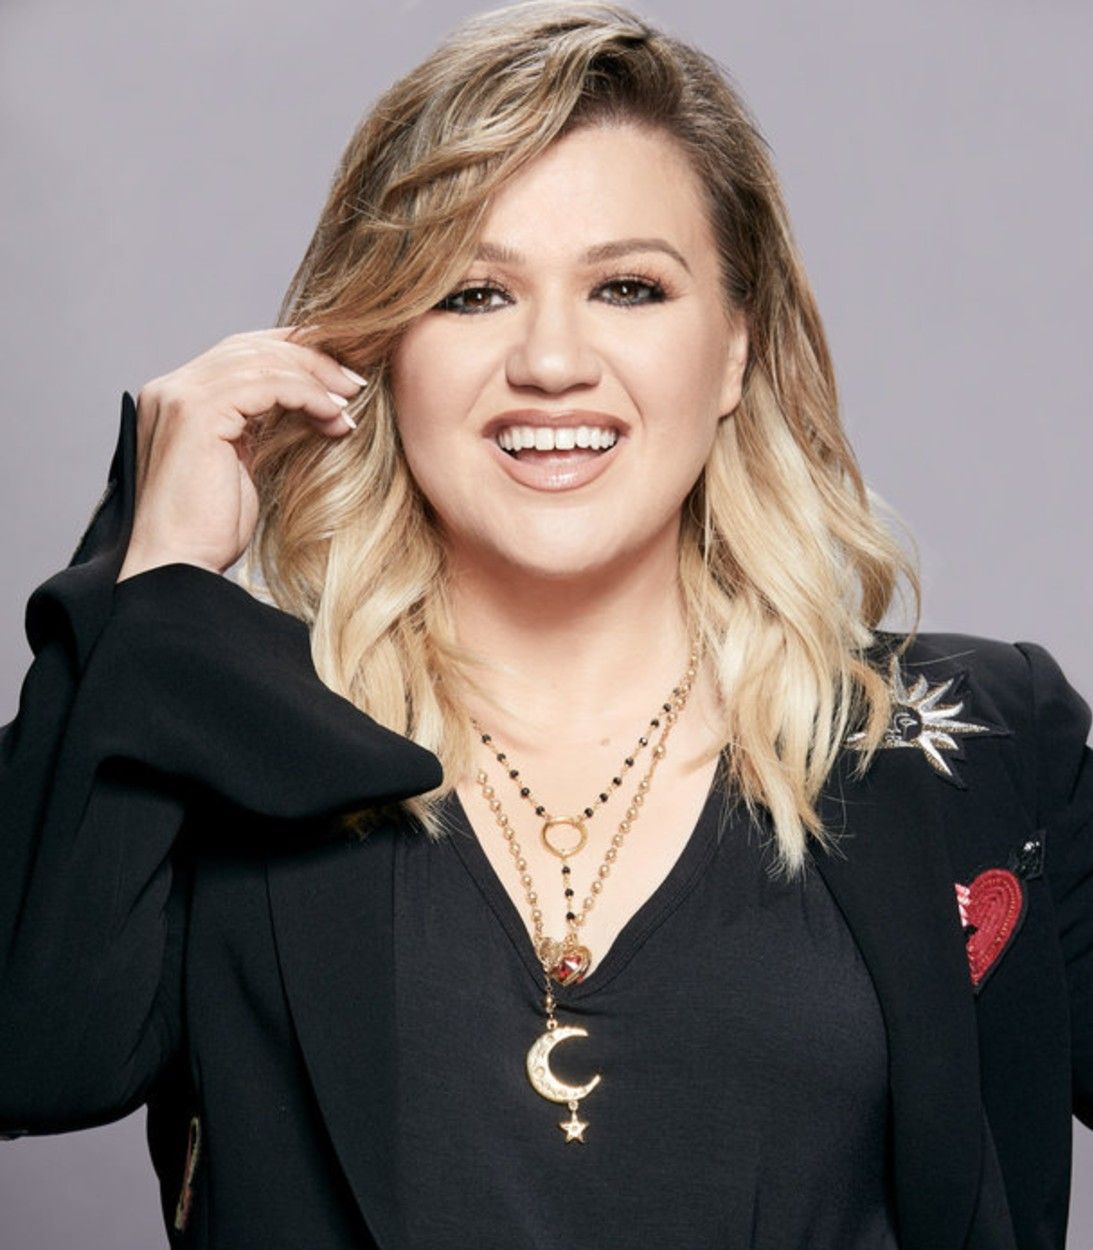 Kelly Clarkson on The Voice season 19 vertical